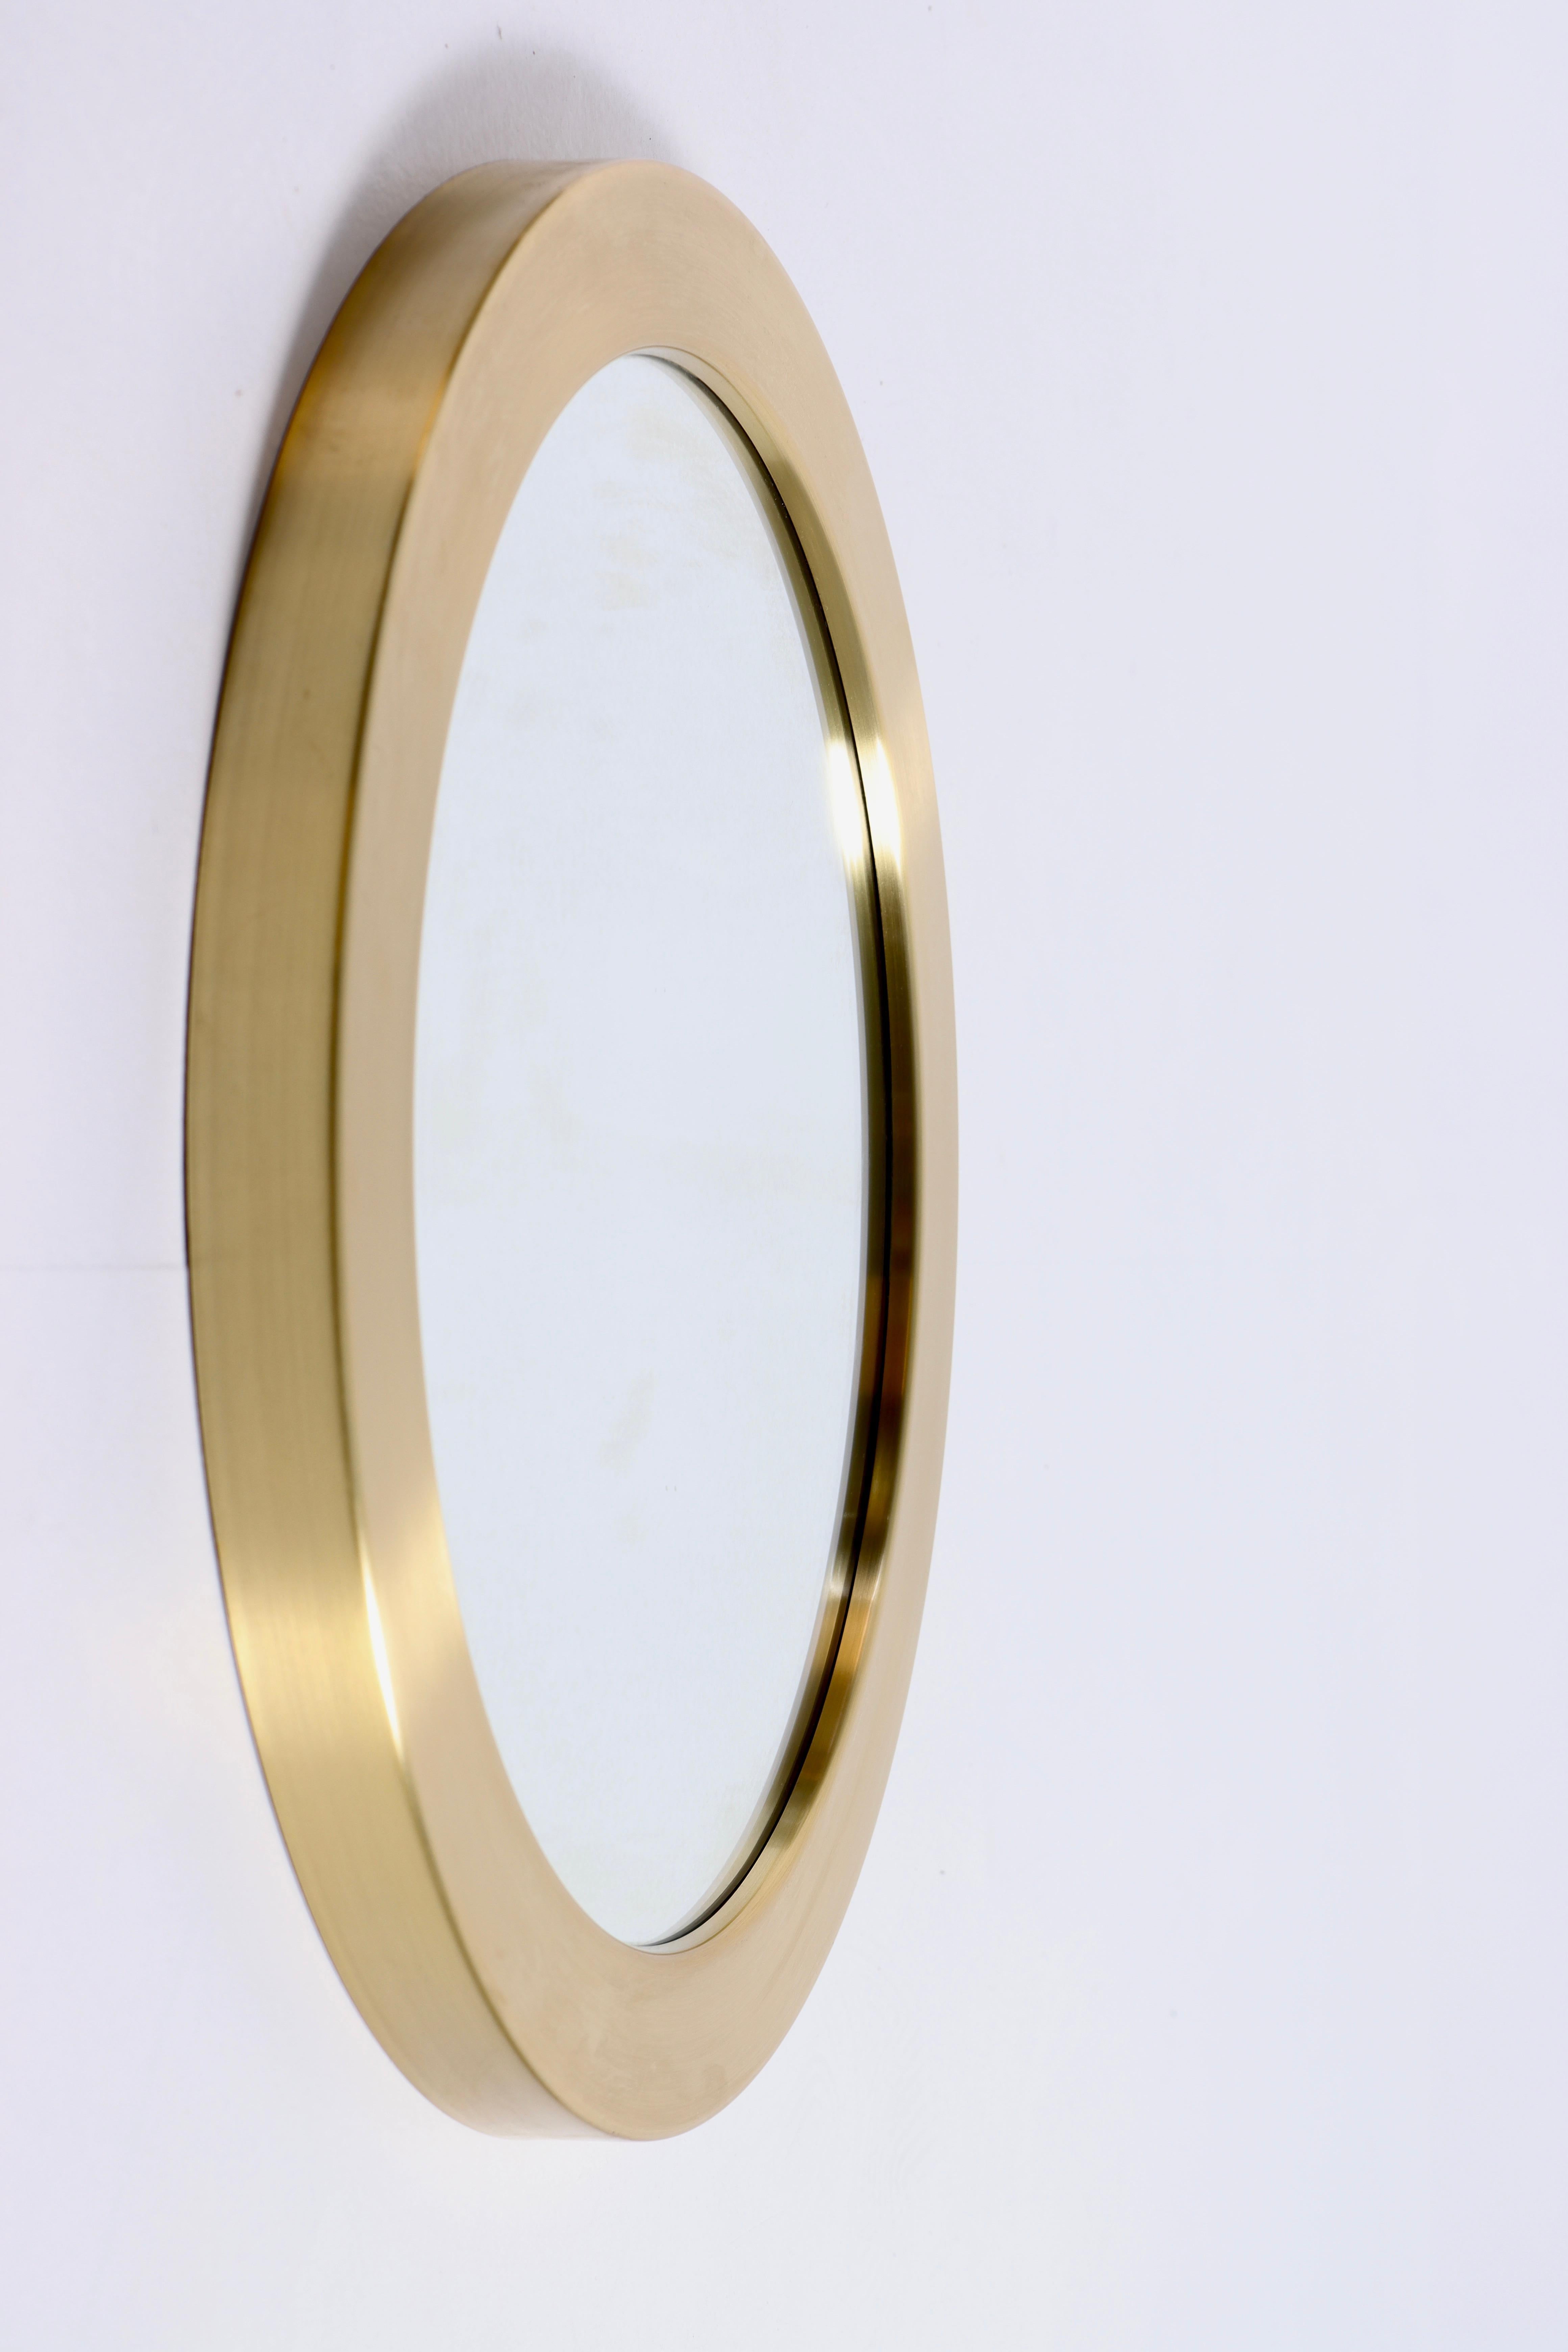 Scandinavian Modern Midcentury Wall Mirror in Brass, Made in Sweden, 1950s For Sale